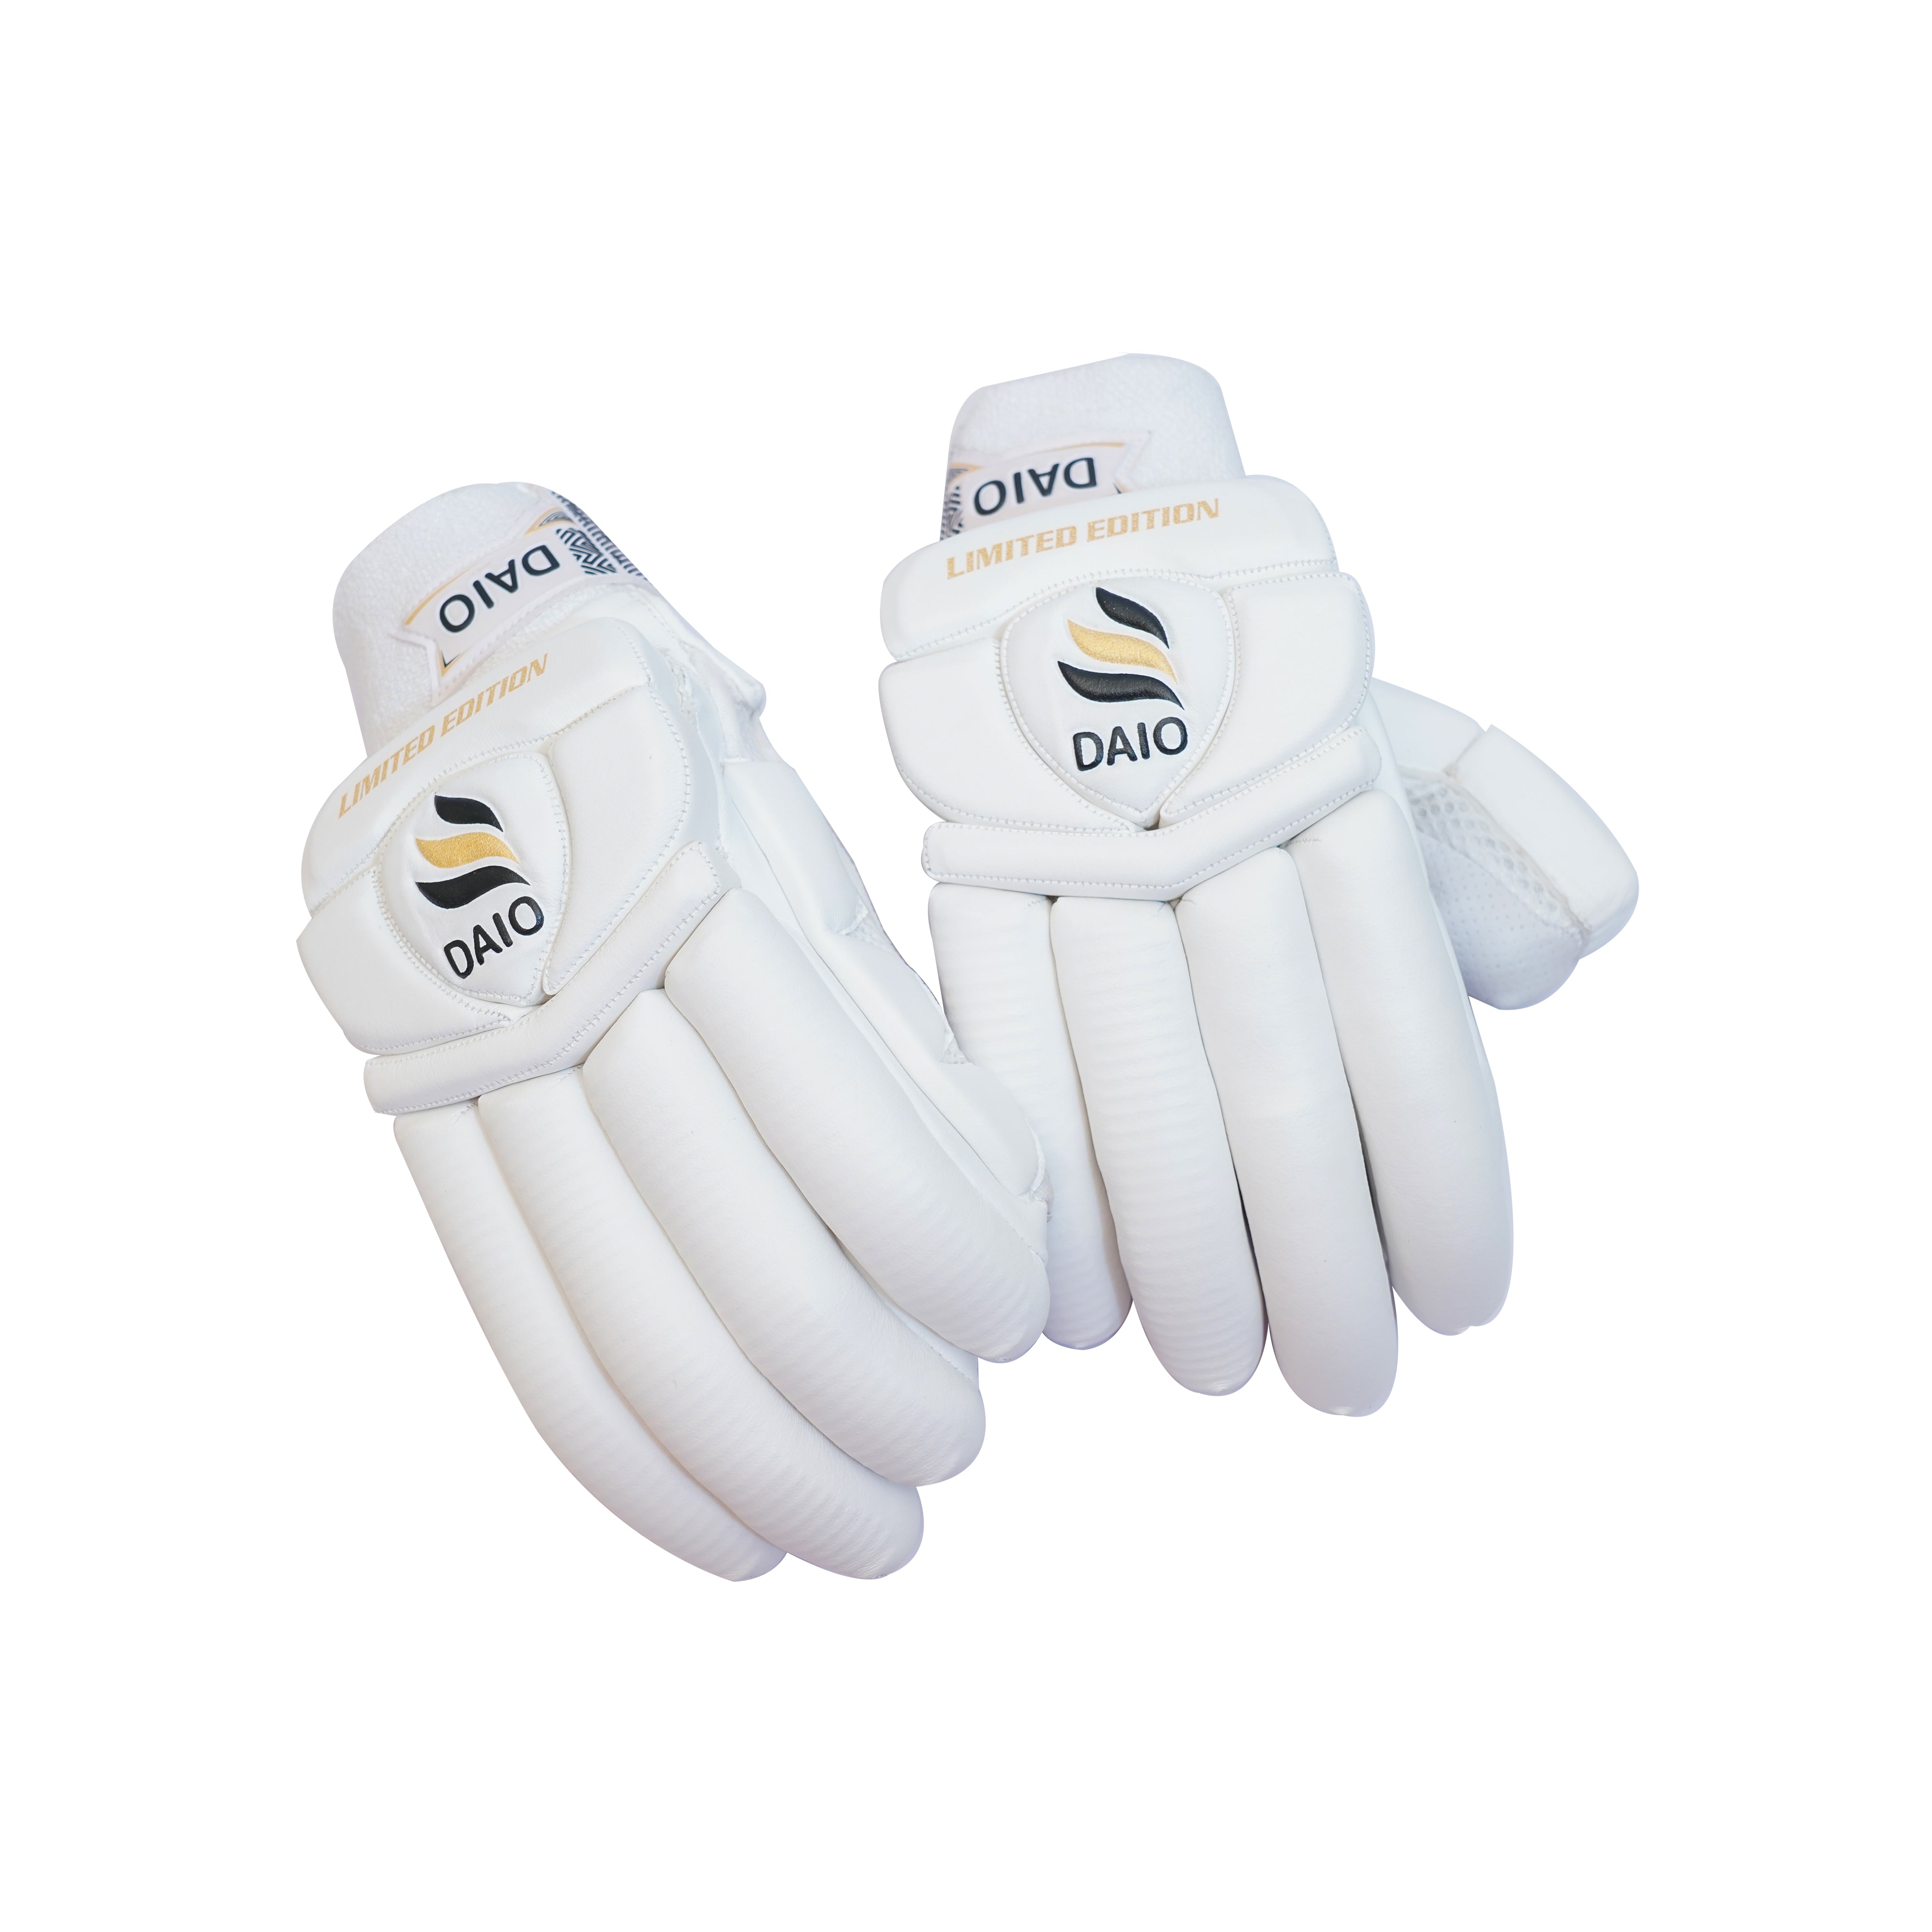 Daio limited edition adult batting glove